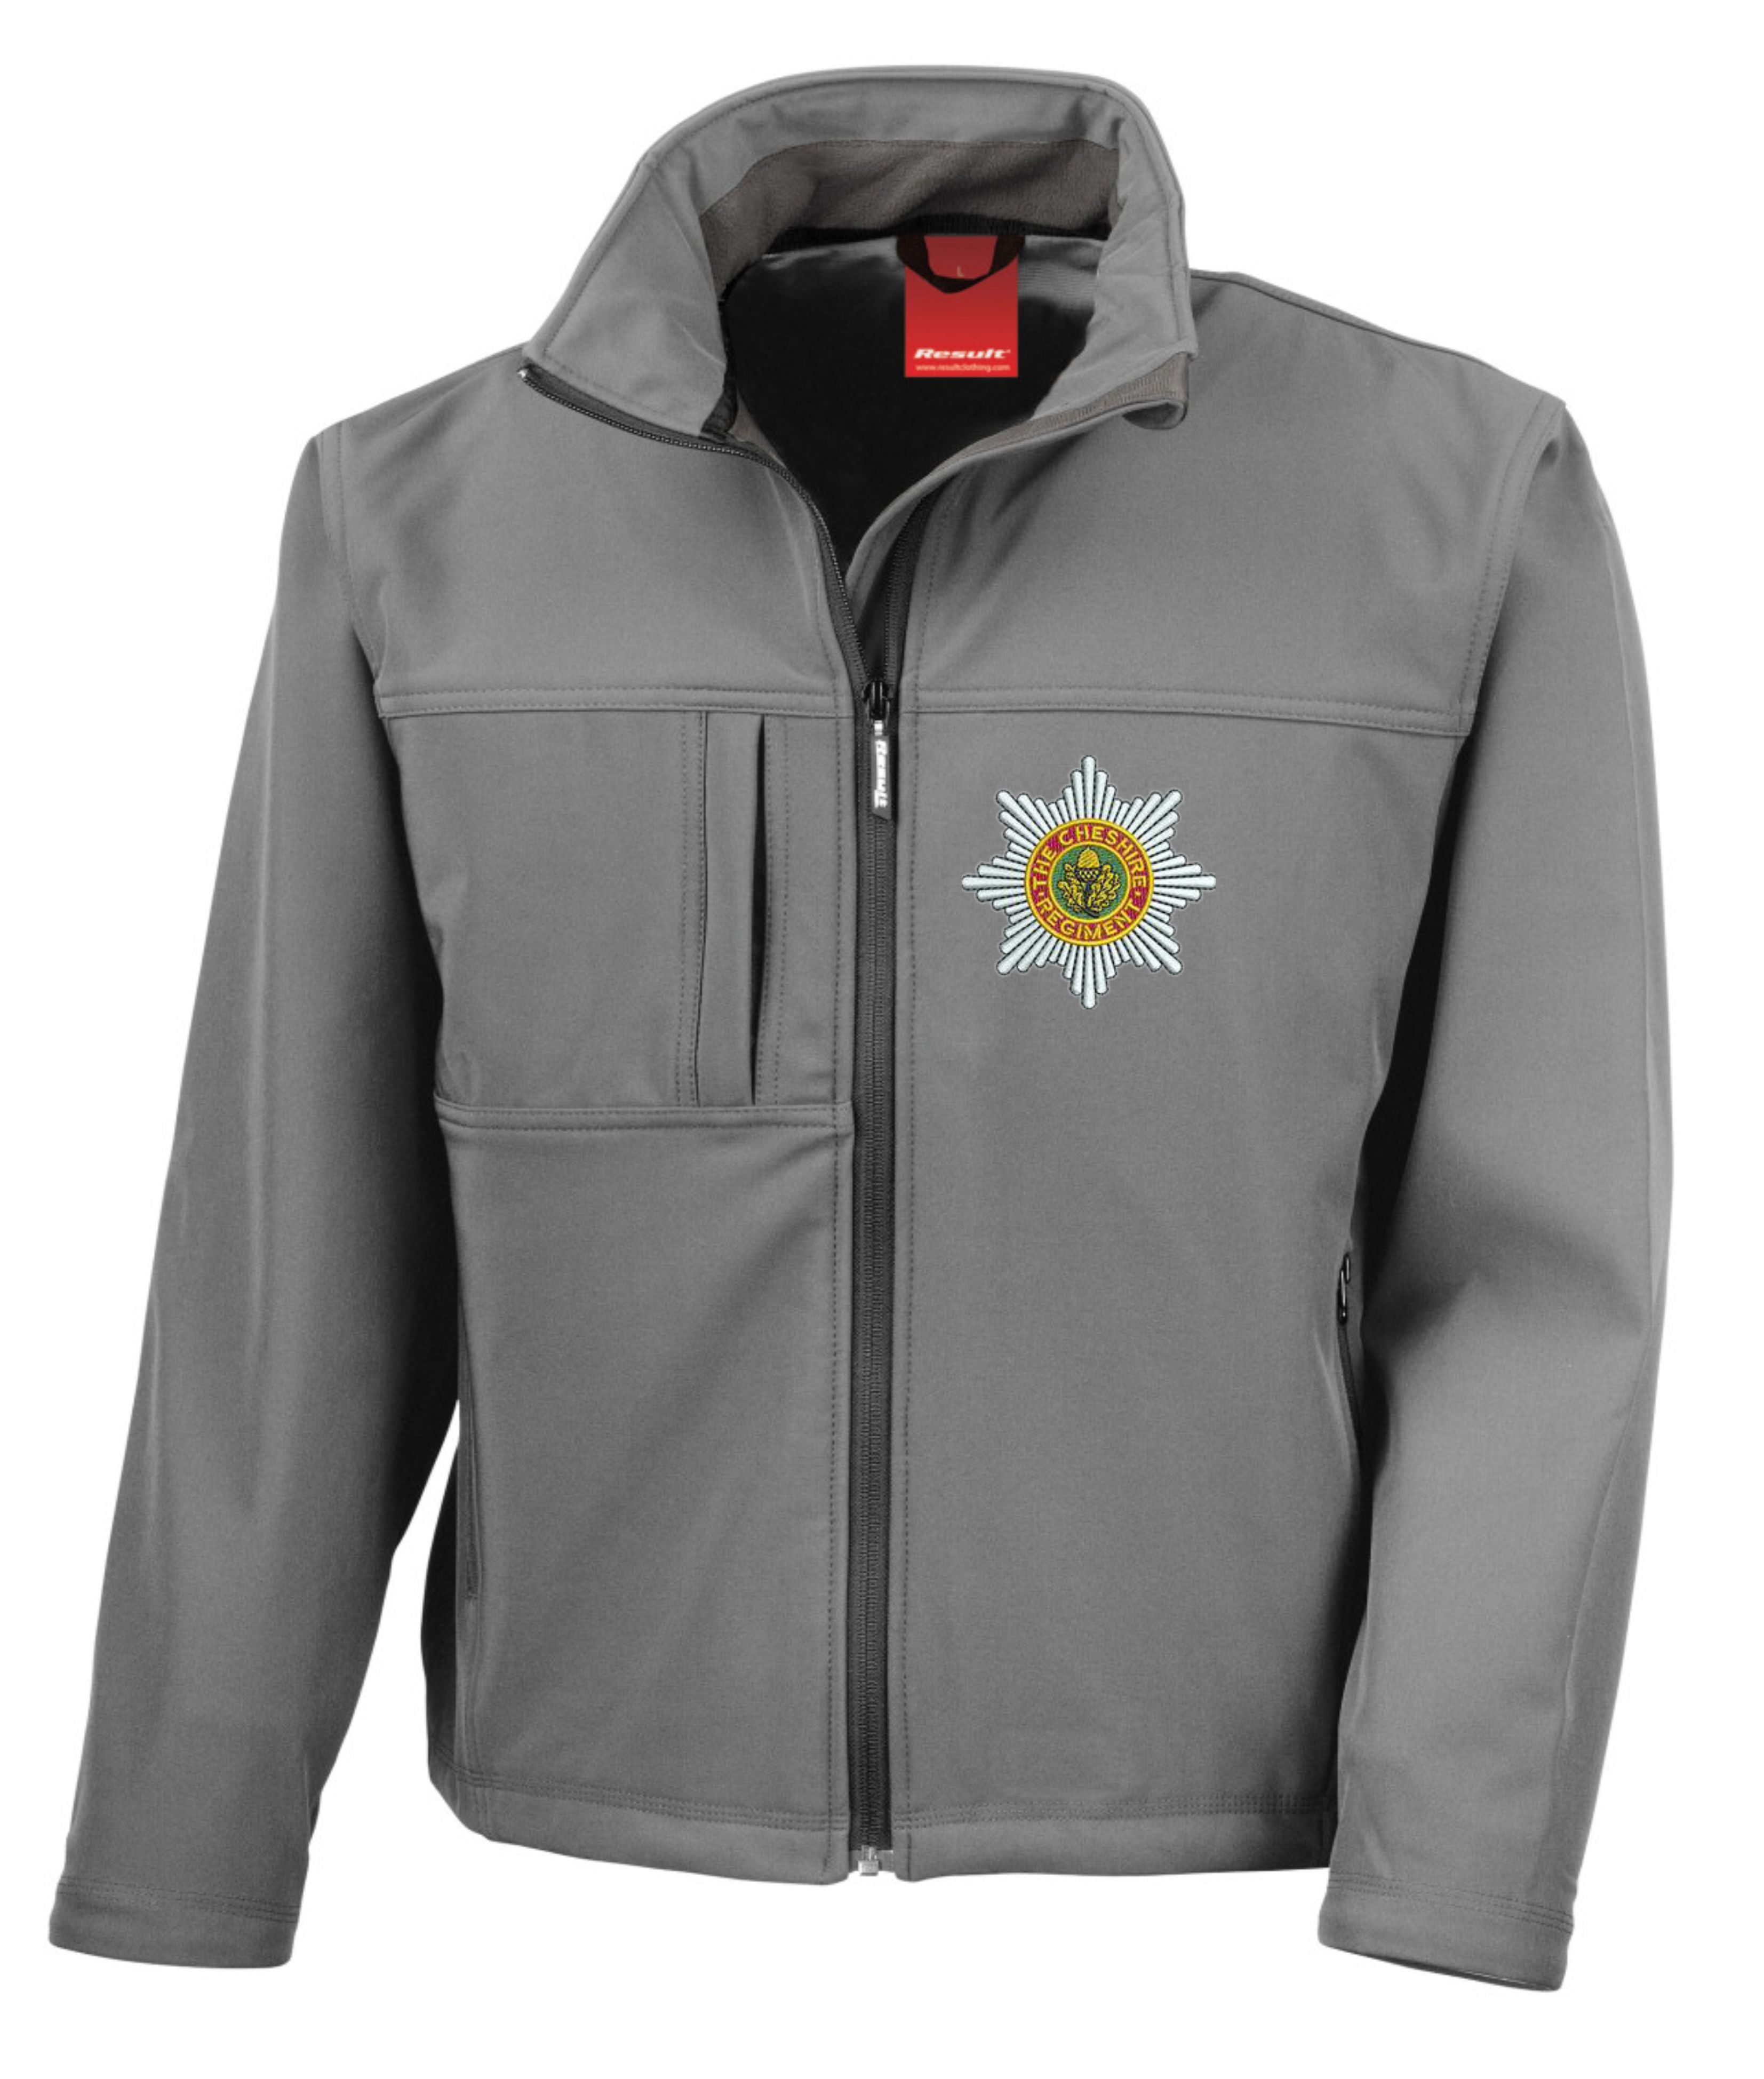 The Cheshire regiment softshell jacket